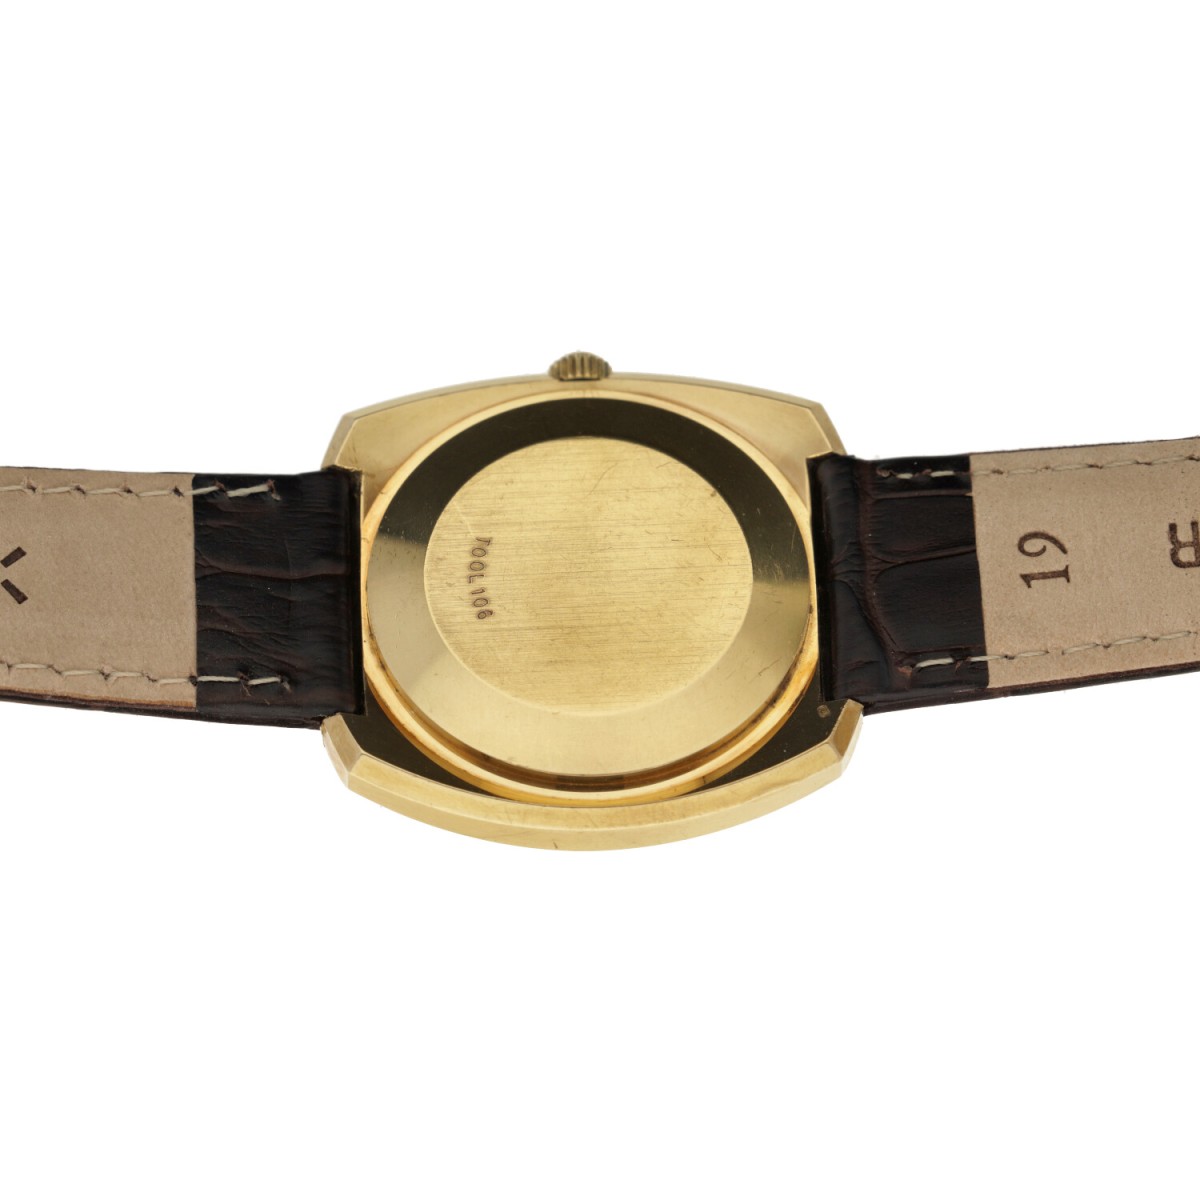 Omega De Ville - Men's watch - approx. 1970. - Image 5 of 6